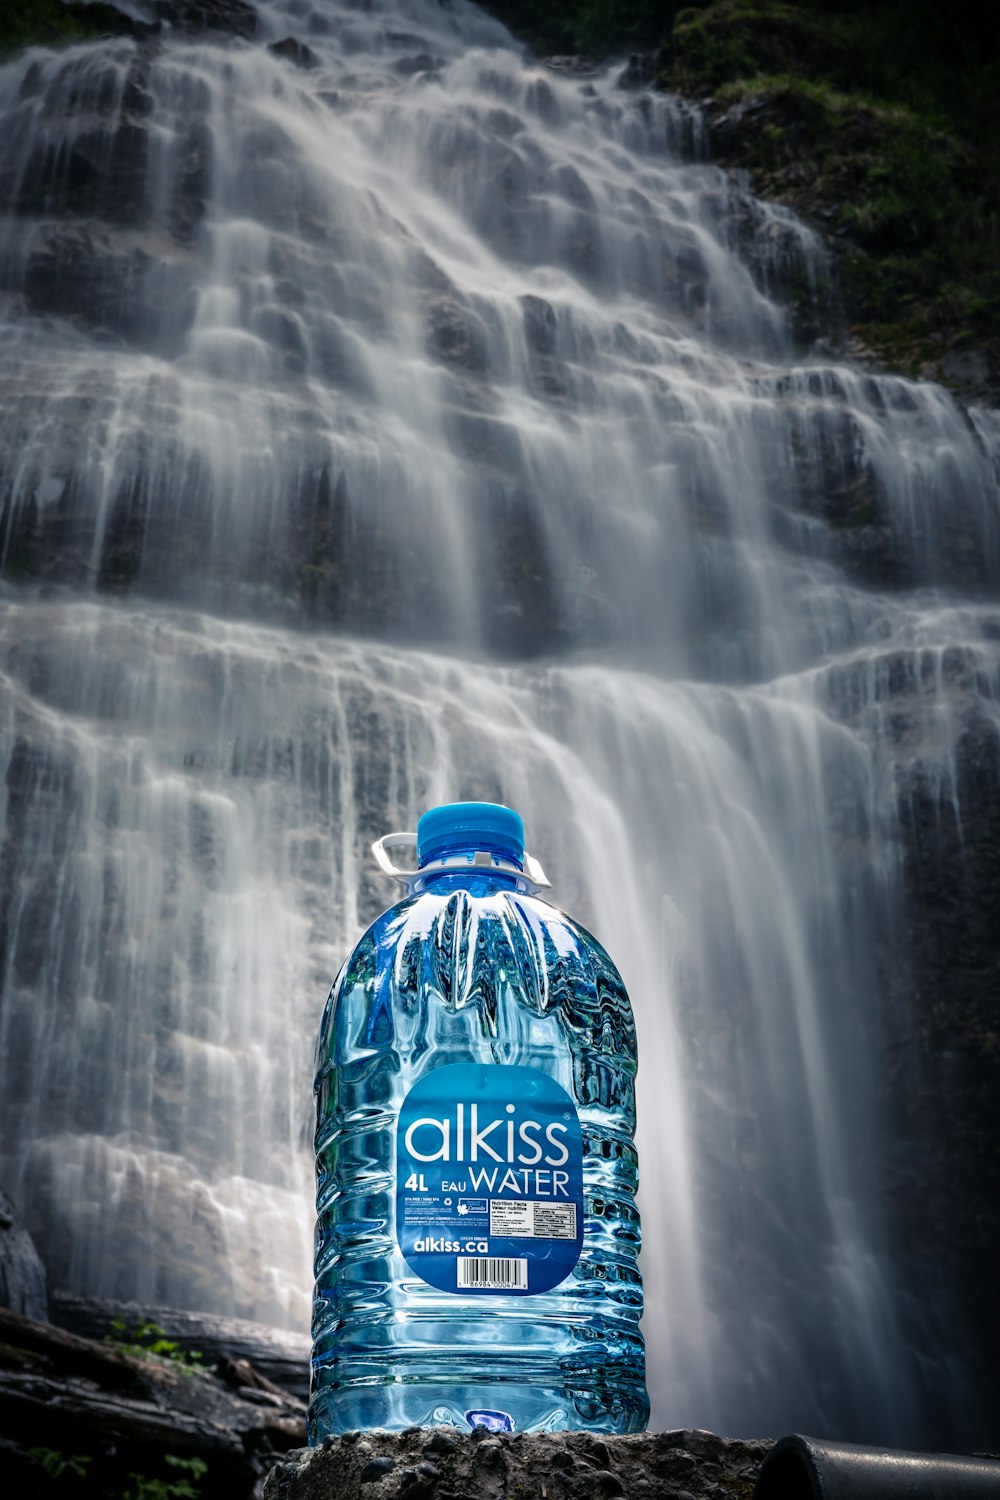 Allkiss water bottle